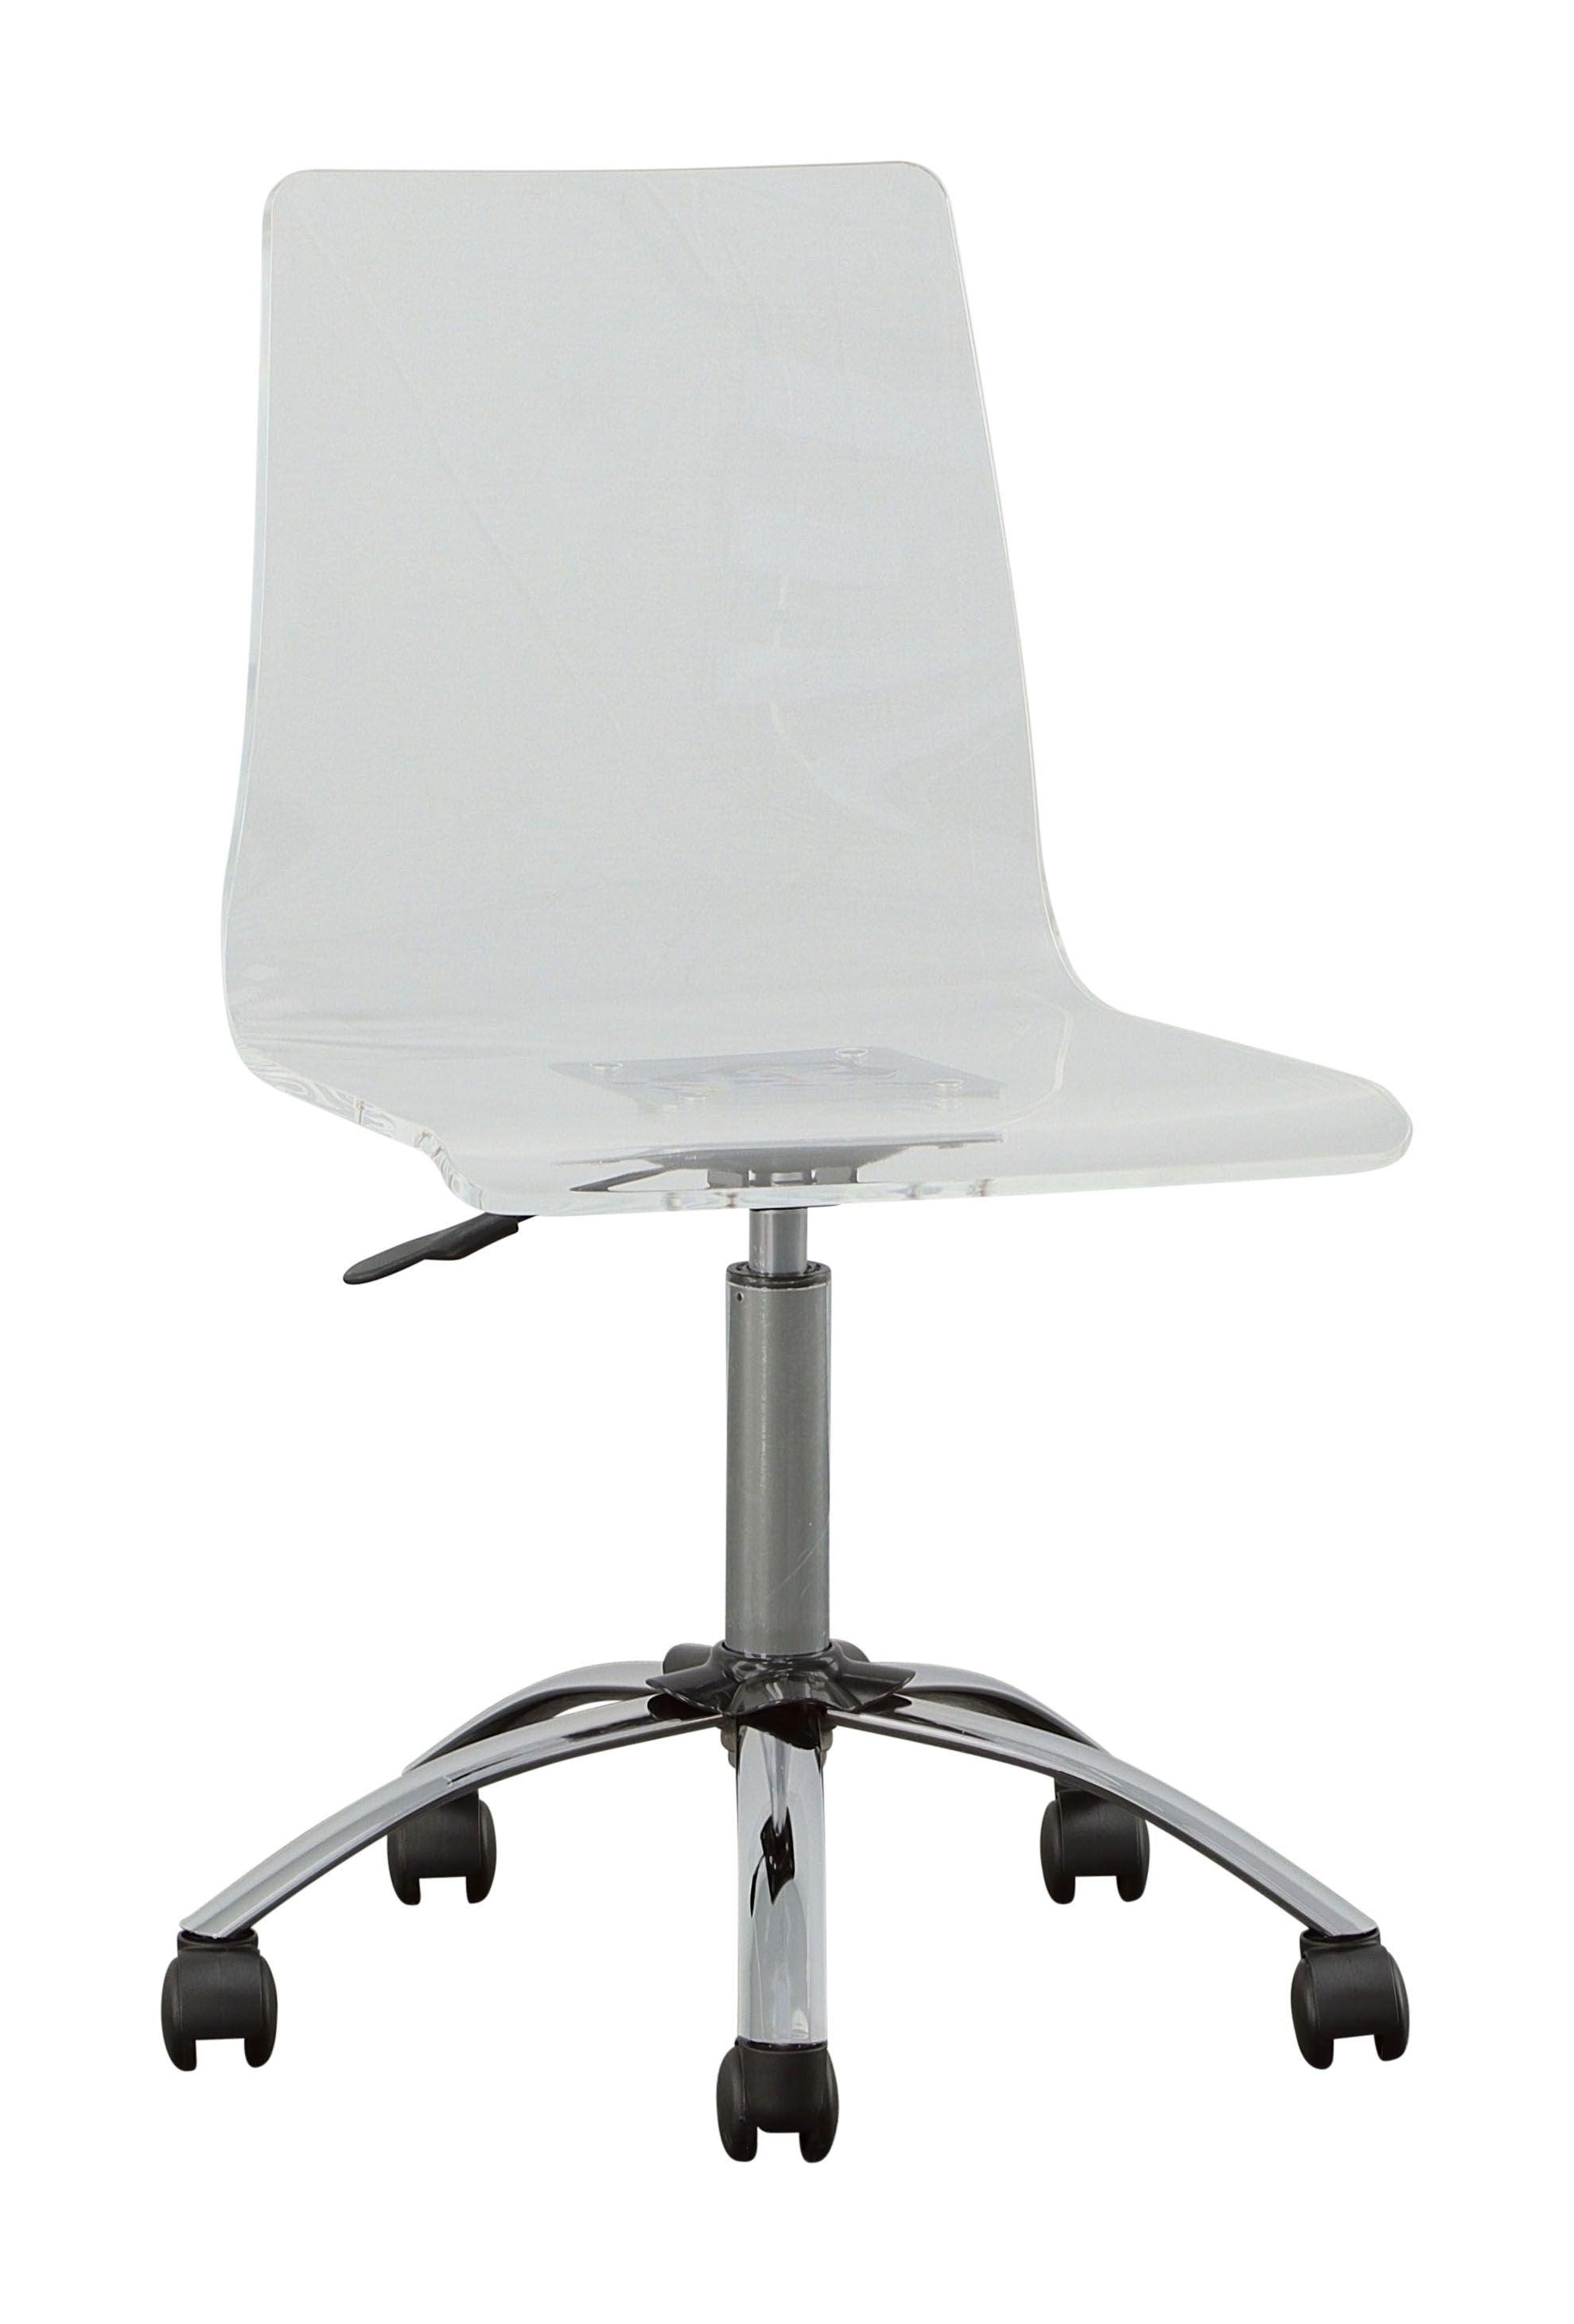 Steve Silver Furniture - Arthur - Adjustable Swivel Chair - Pearl Silver - 5th Avenue Furniture